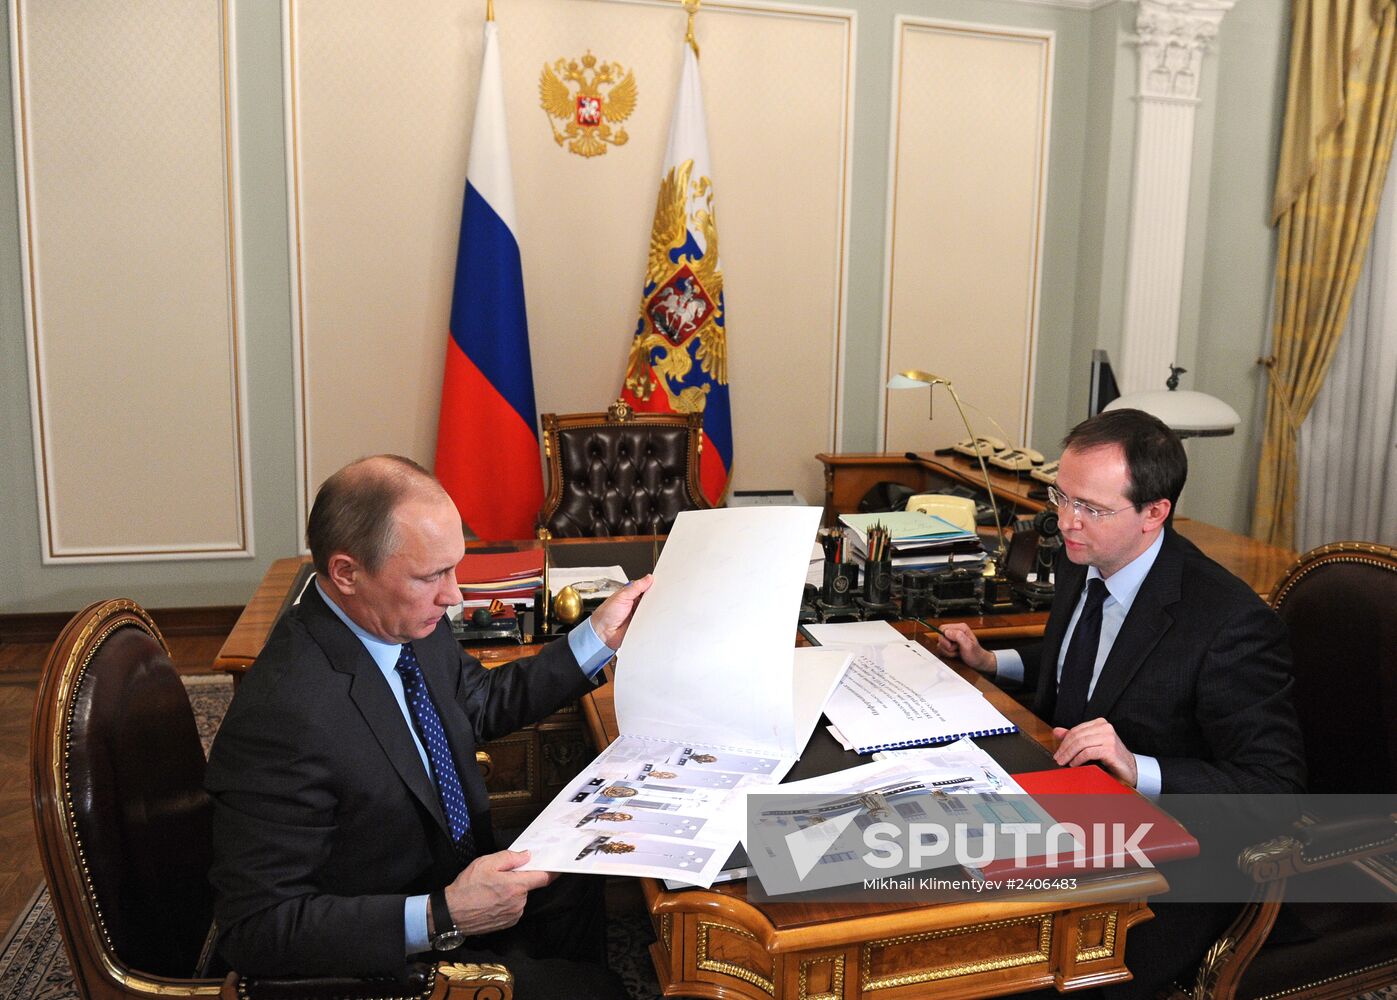 President putin meets with Vladimir Medinsky